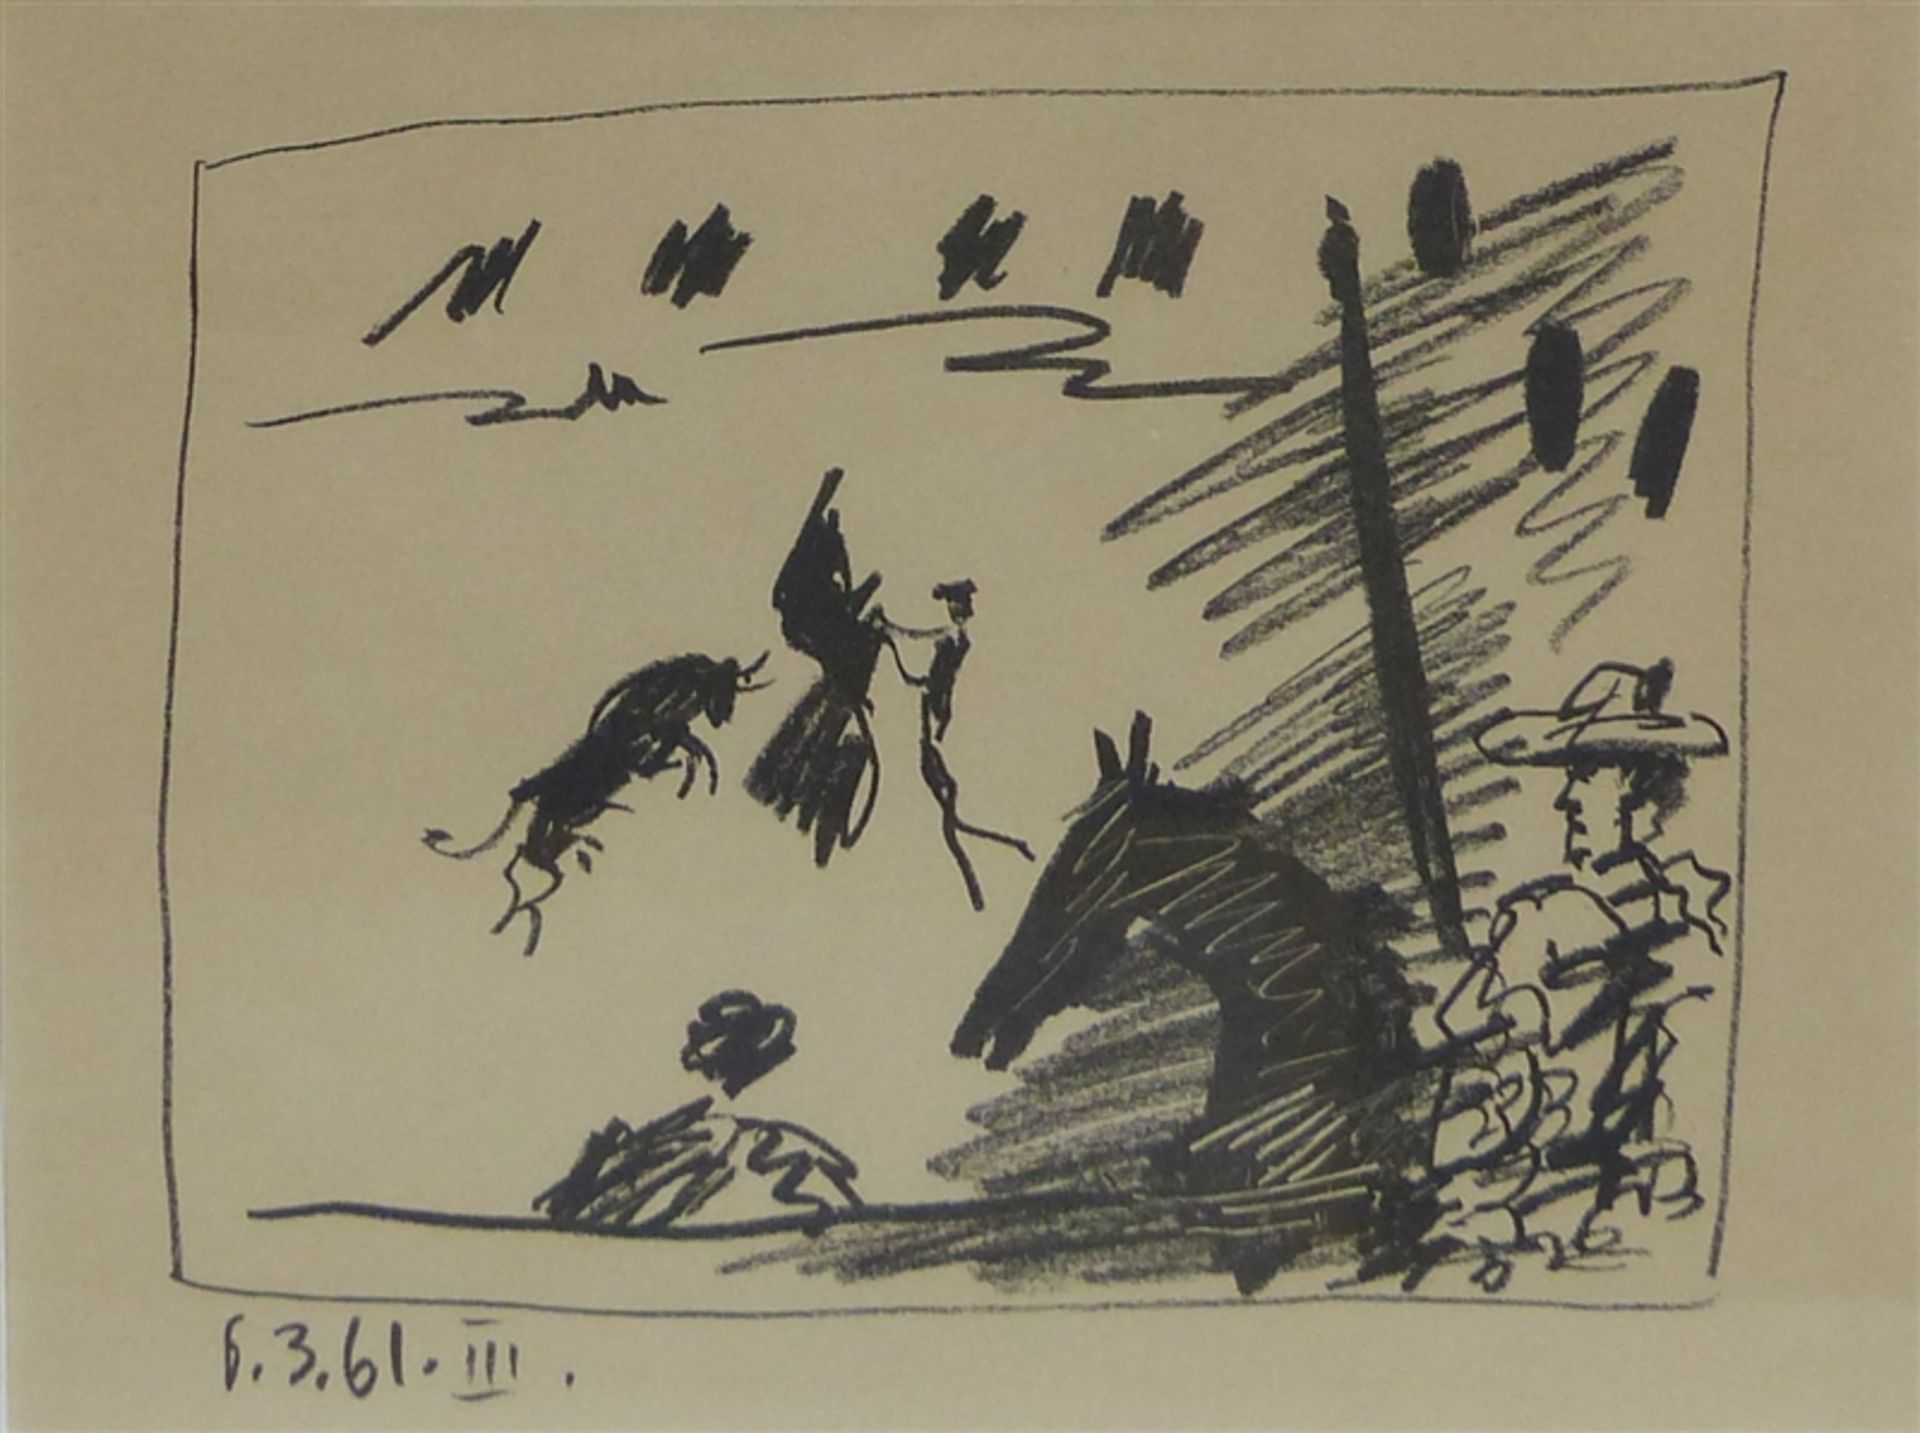 Picasso, Pablo 1881 Malaga - 1973 Mougins, Lithographie, "Le picador", impressionistische